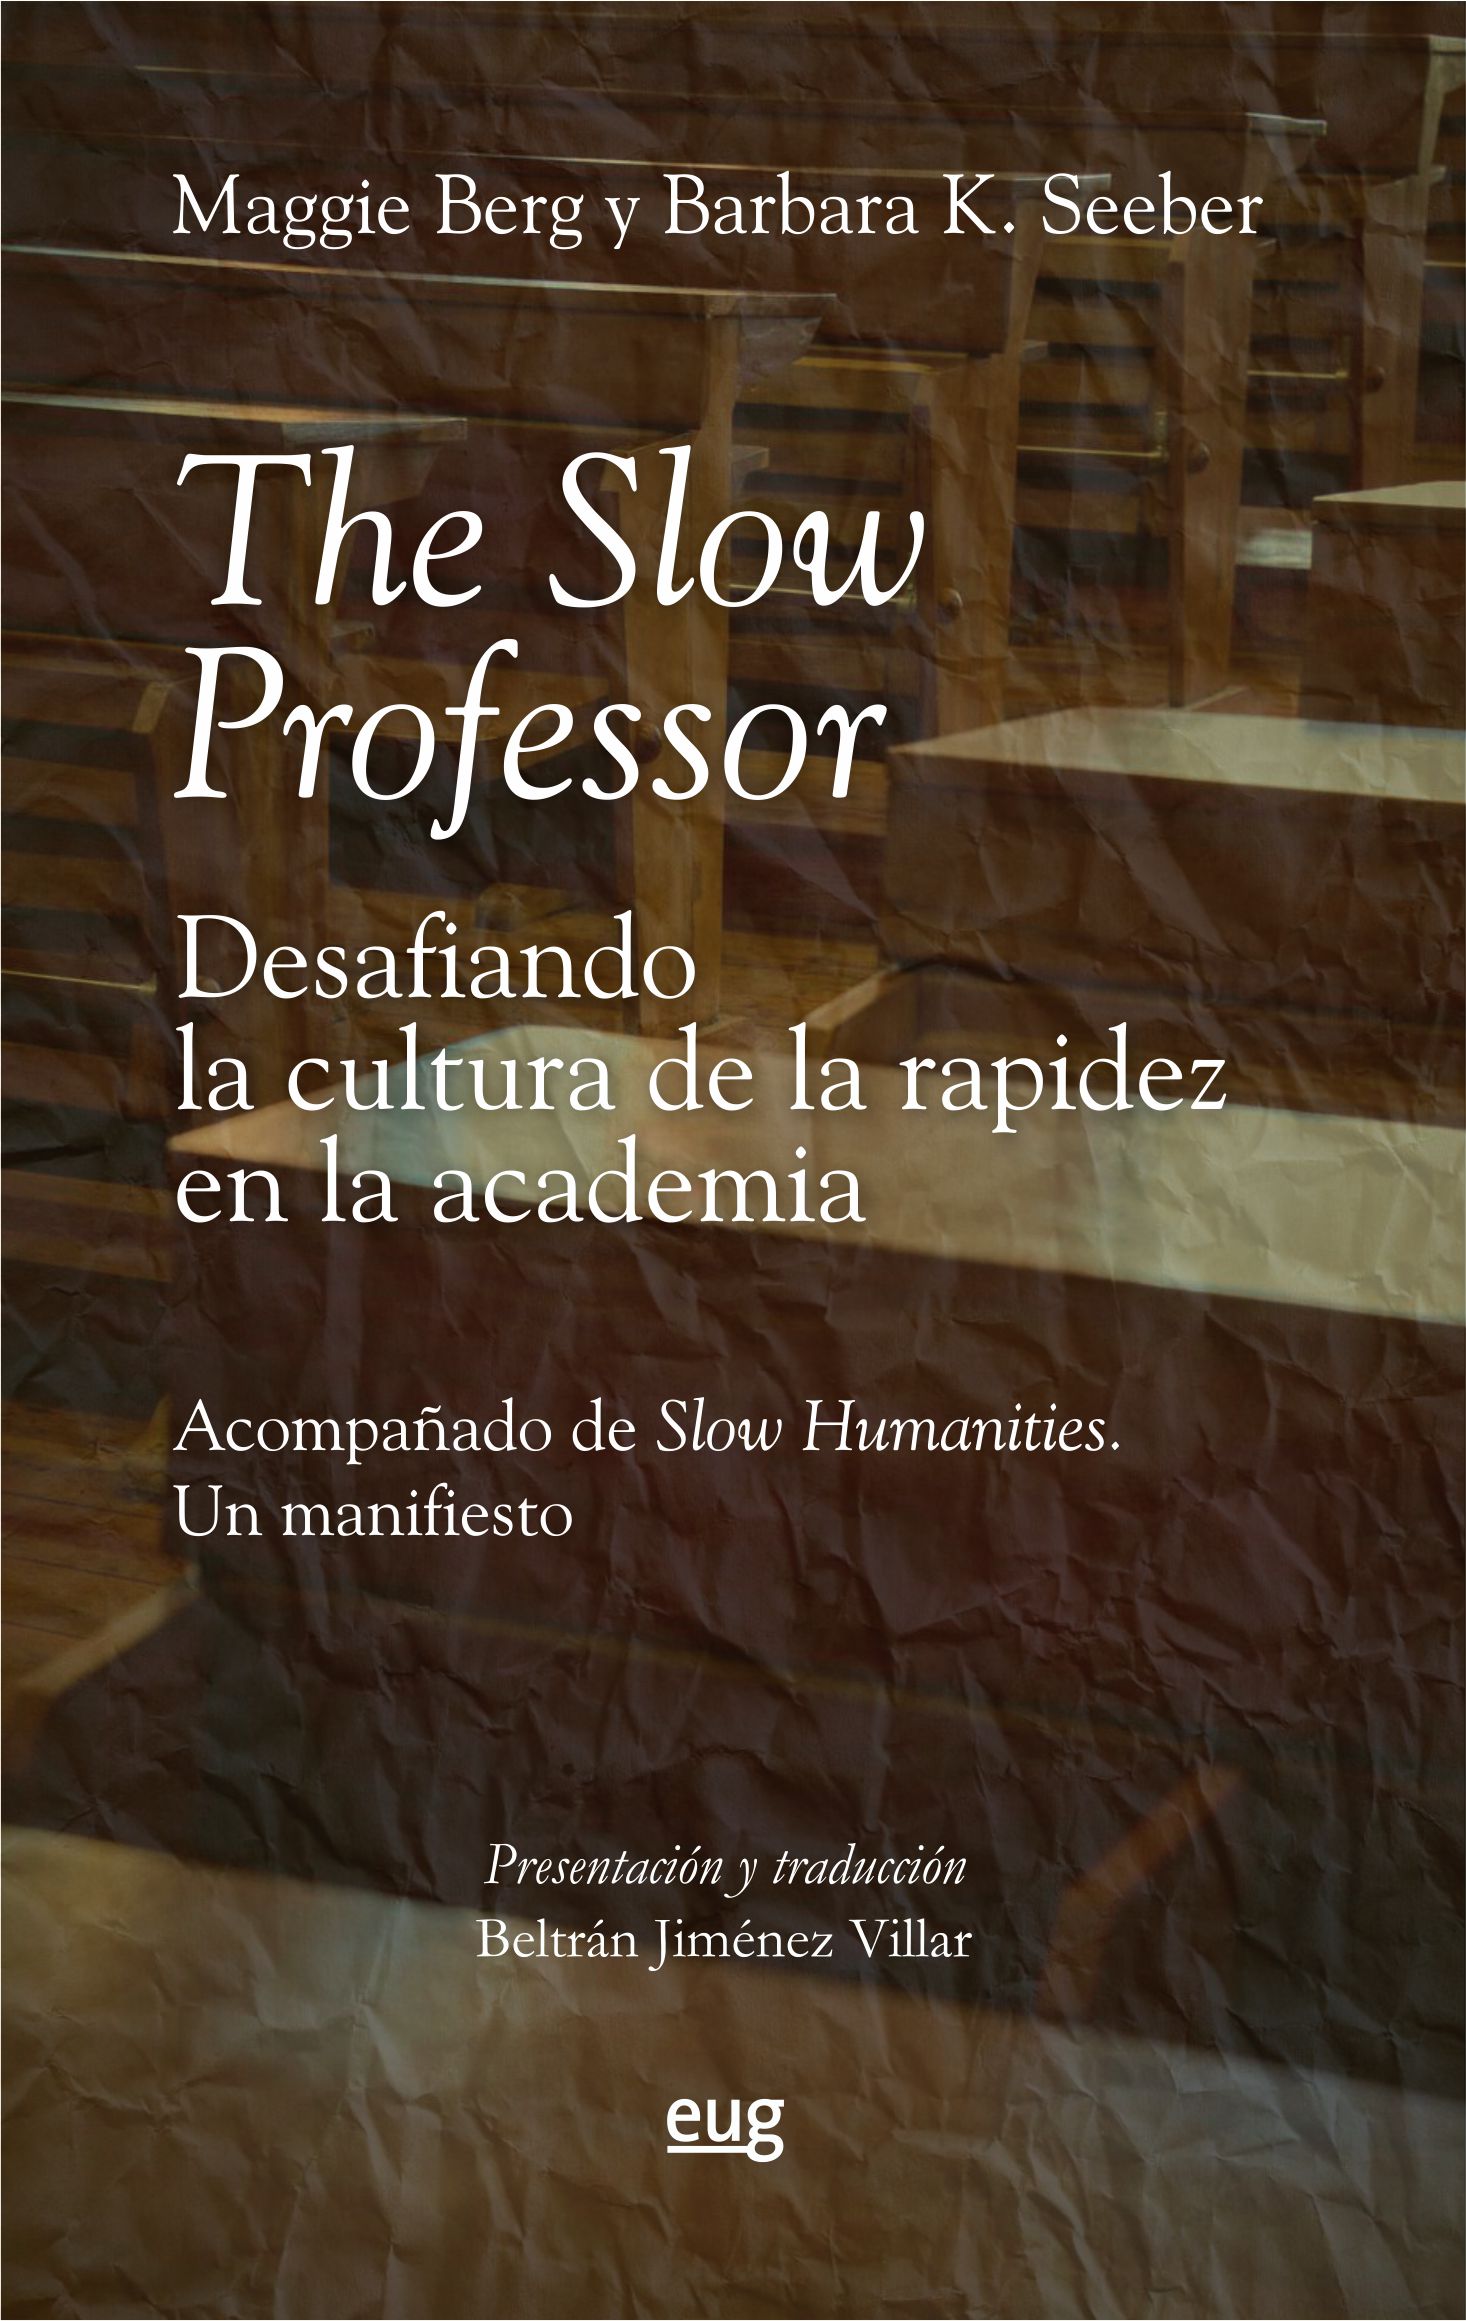 The Slow Professor: desafiando la cultura de la rapidez en la academia